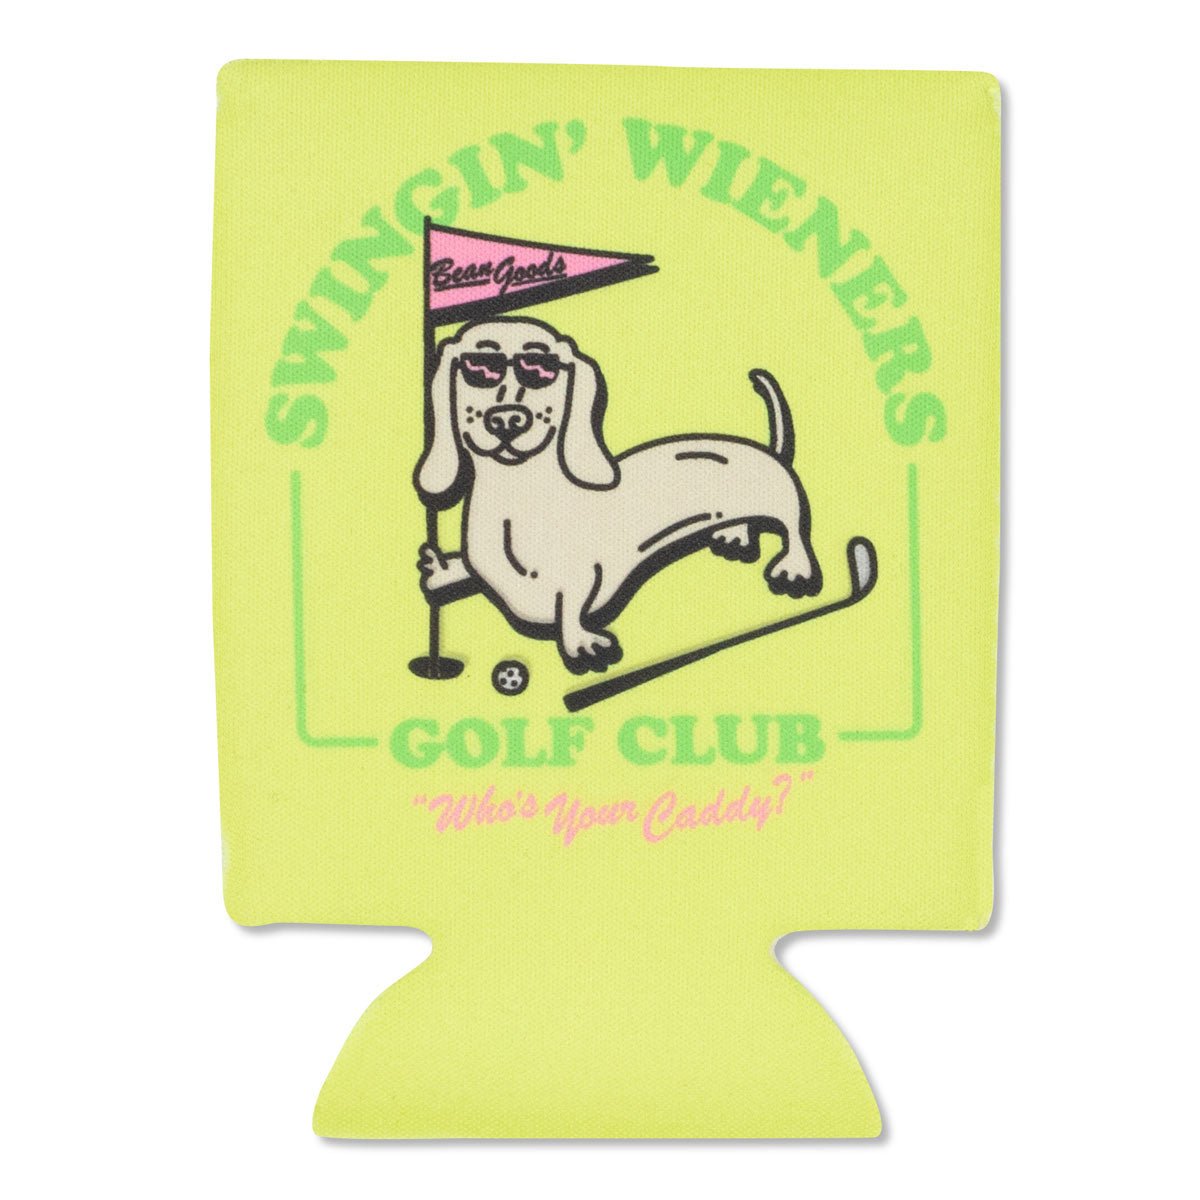 swingin' wieners golf club can cooler - bean goods